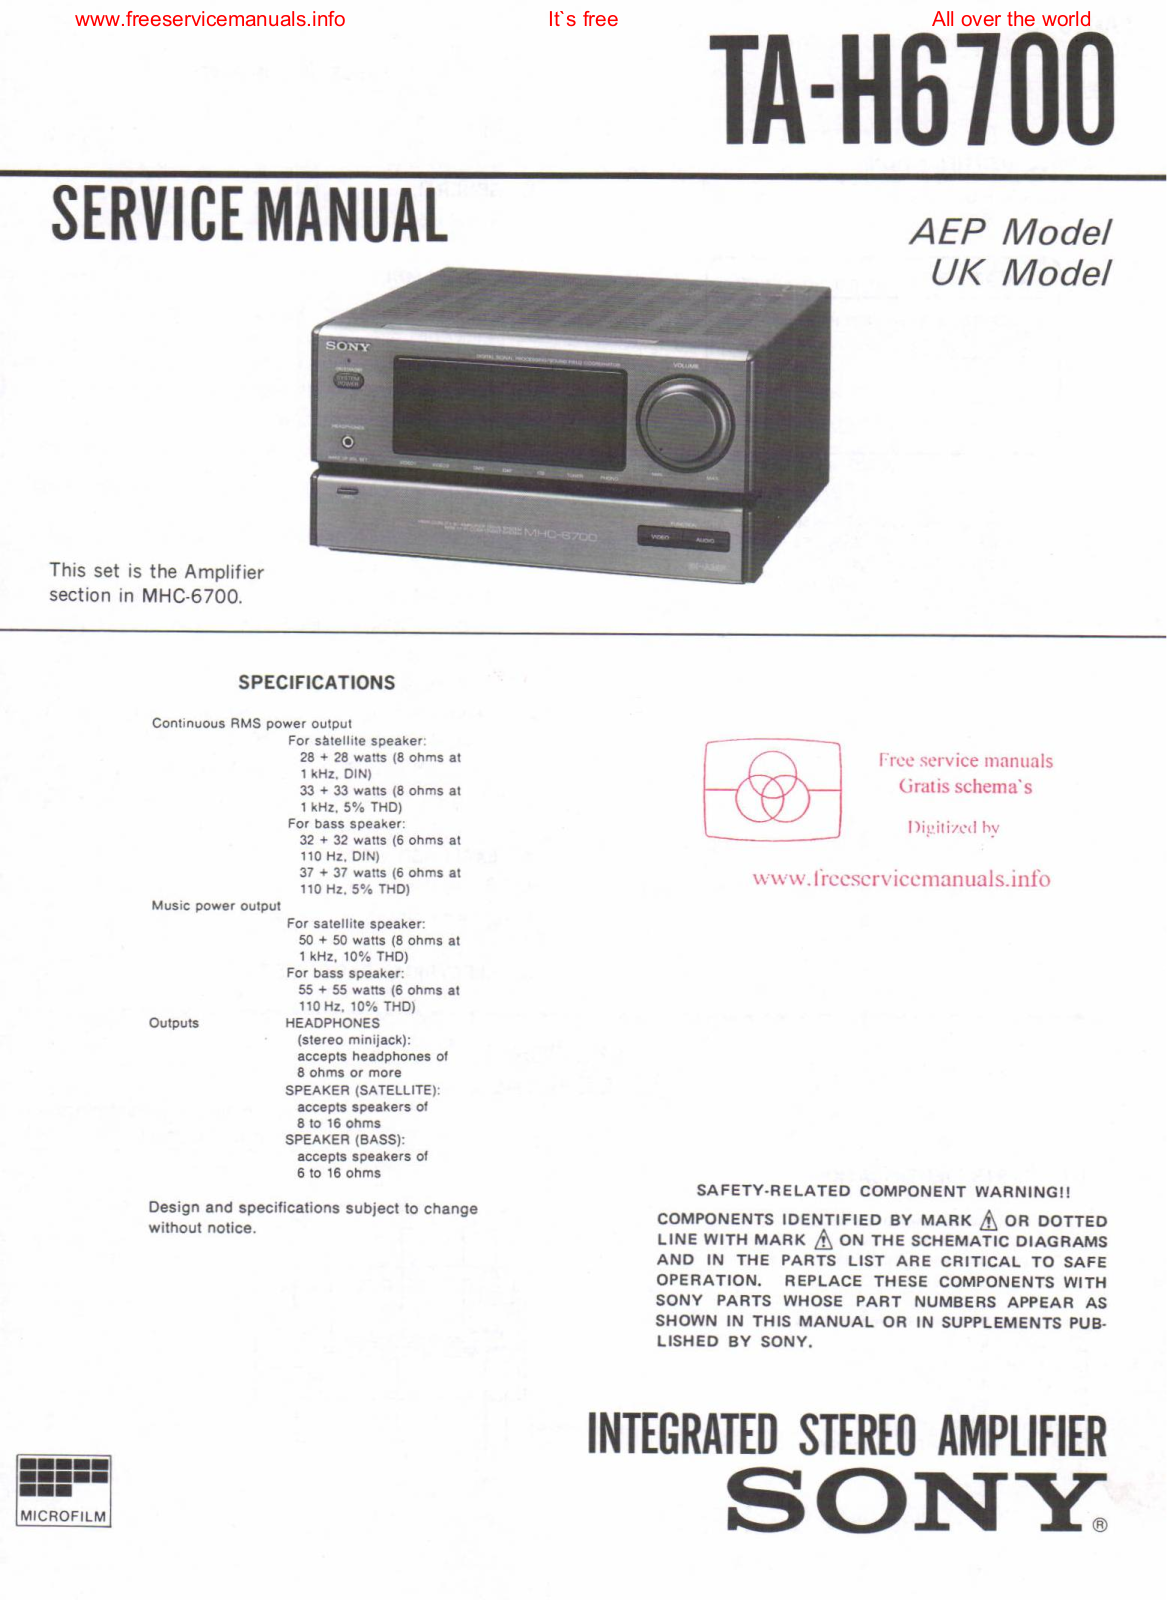 Sony TA-H6700, MHC-6700 Schematic